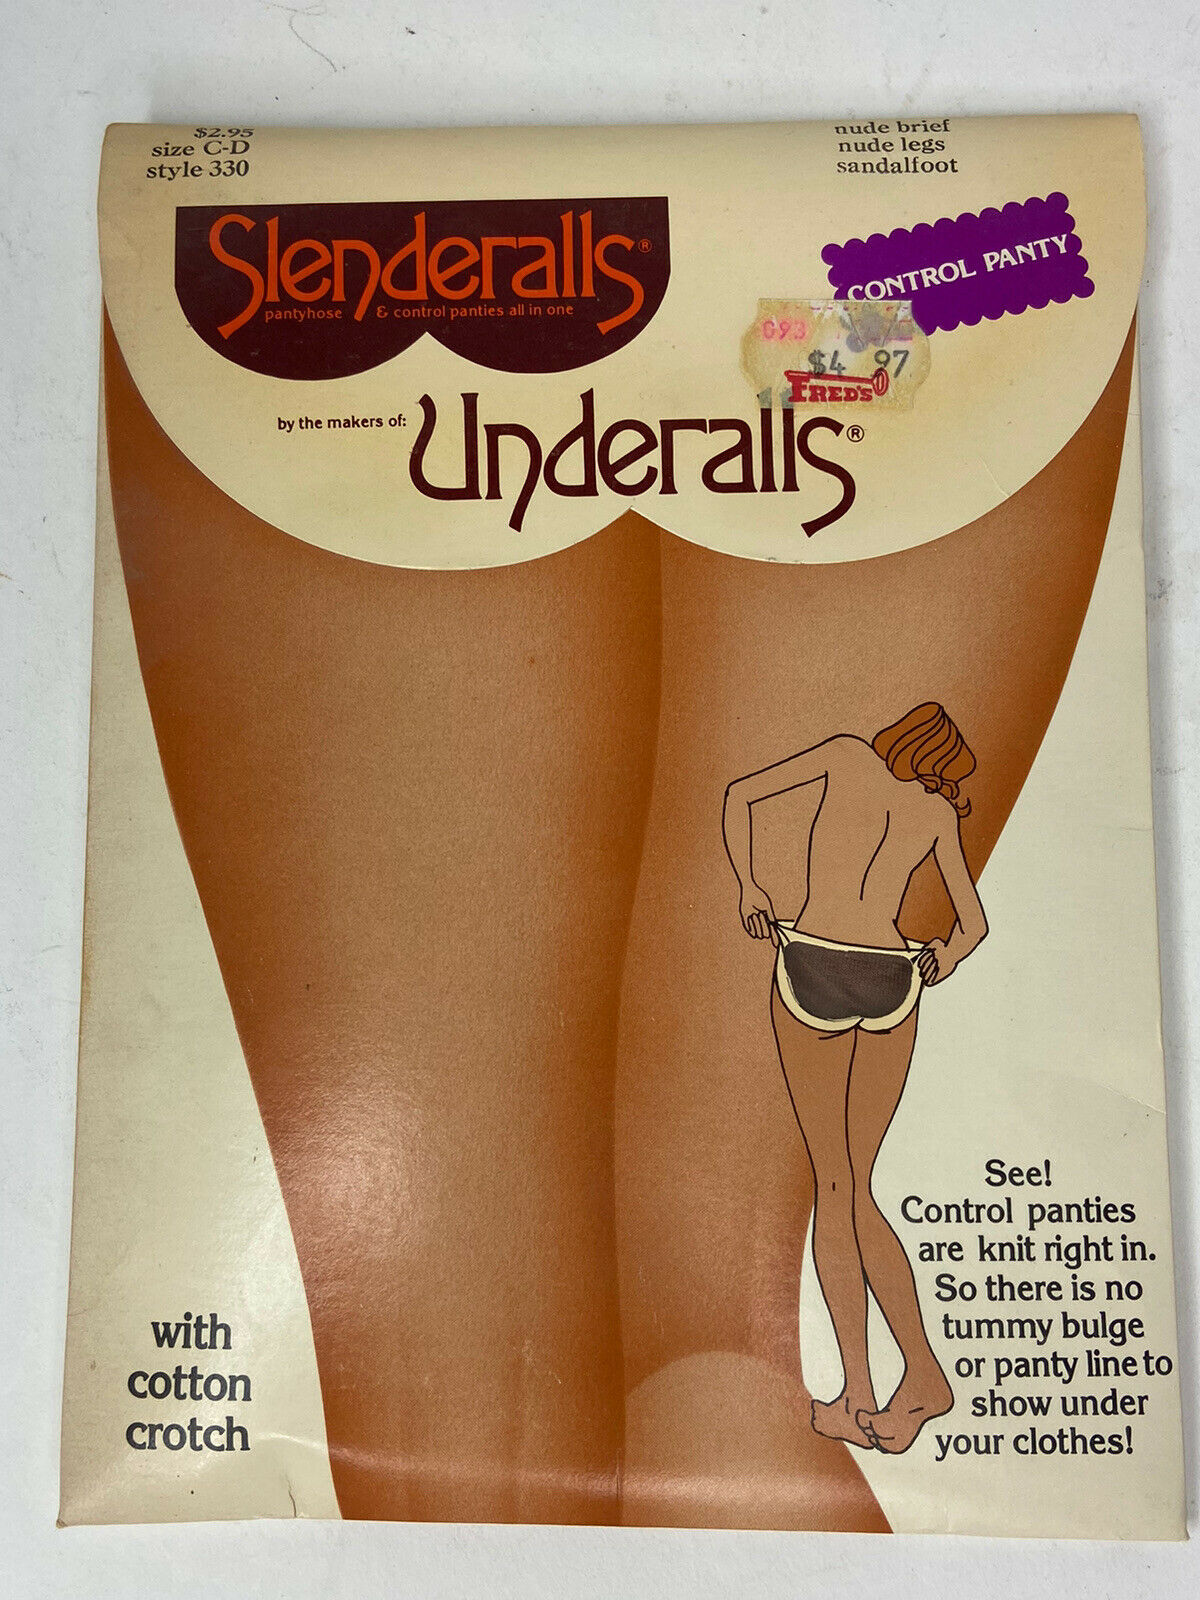 Vintage 1977 Slenderalls Underalls Pantyhose Size C-d Sandalfoot Color: Nude